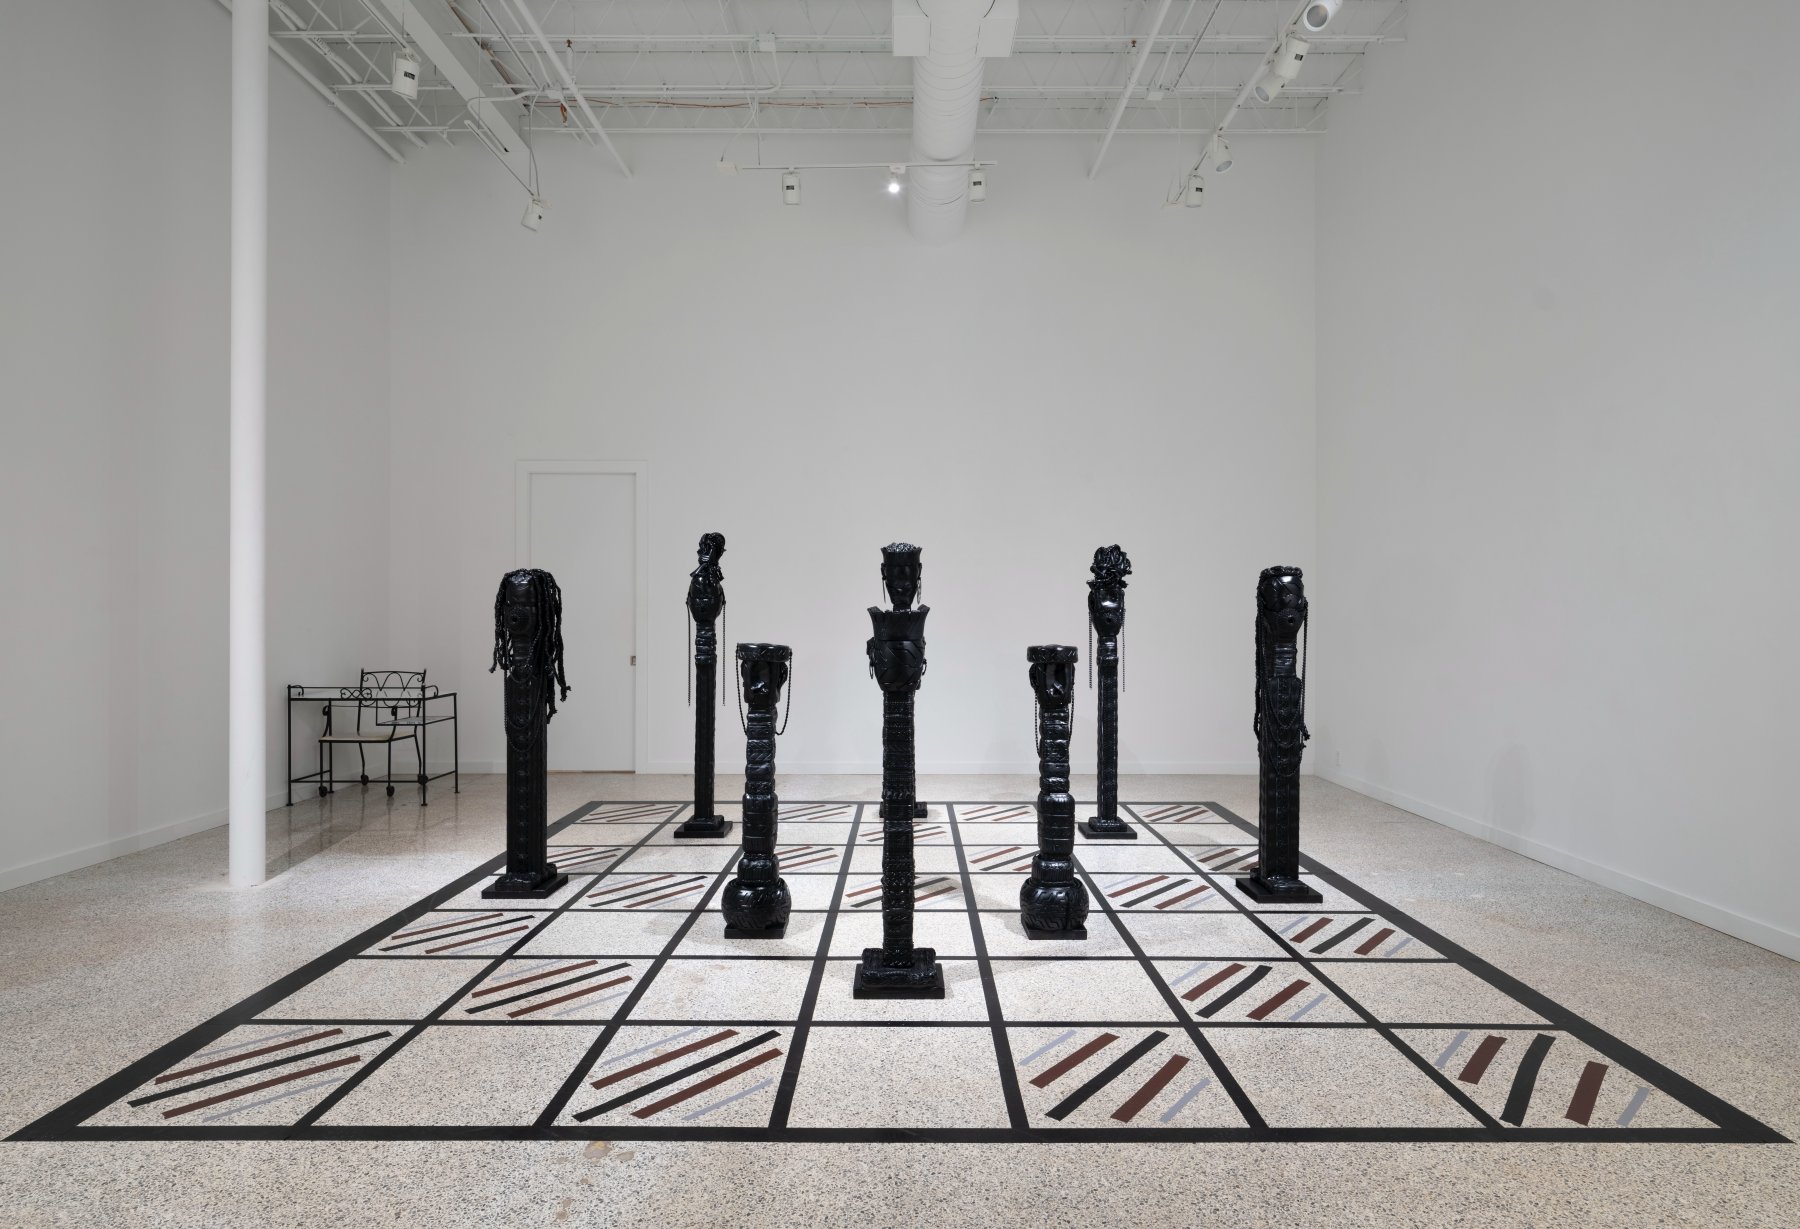 Installation image for Kim Dacres: Black Moves First, at GAVLAK